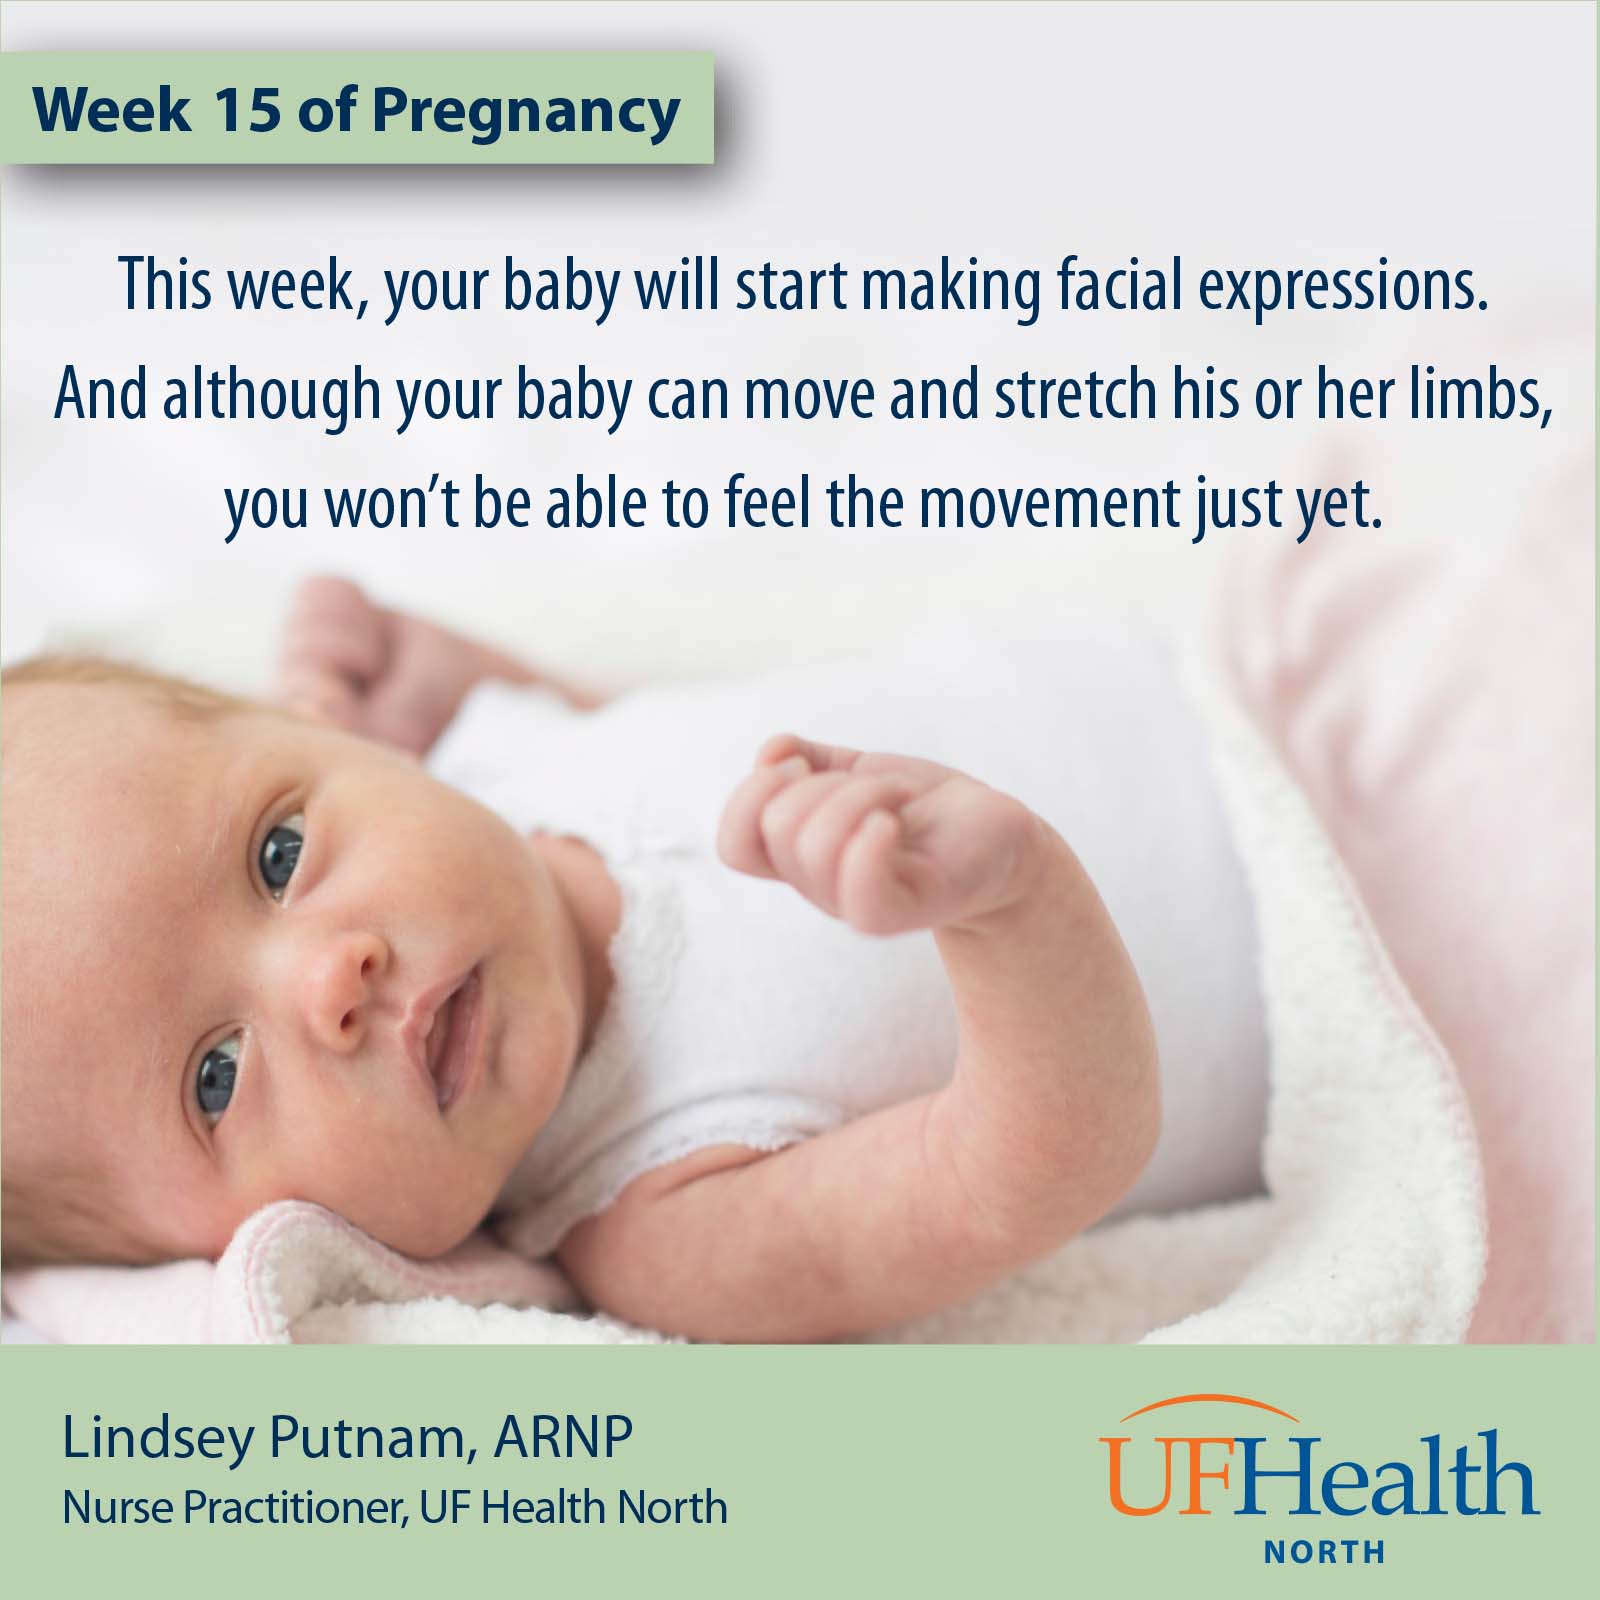 UF Health North pregnancy tip 15